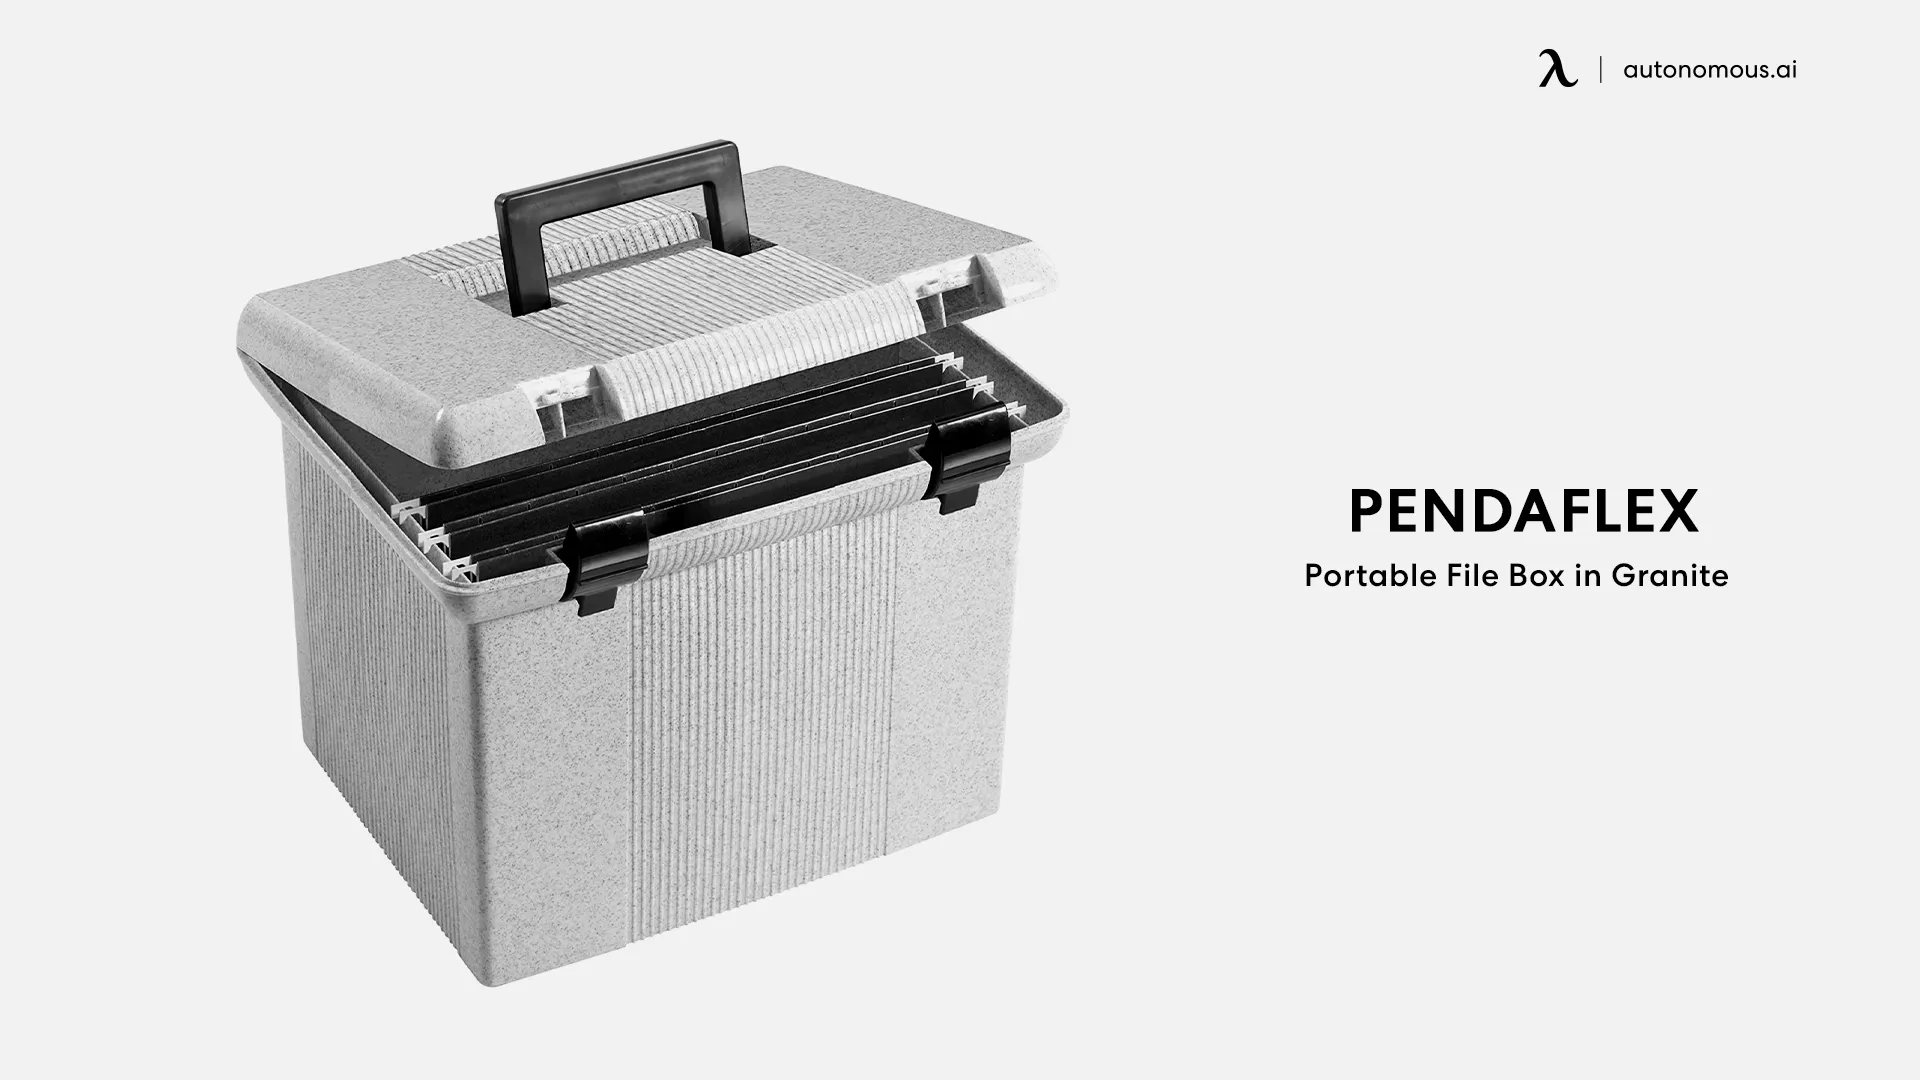 Pendaflex’s Portable File Box in Granite